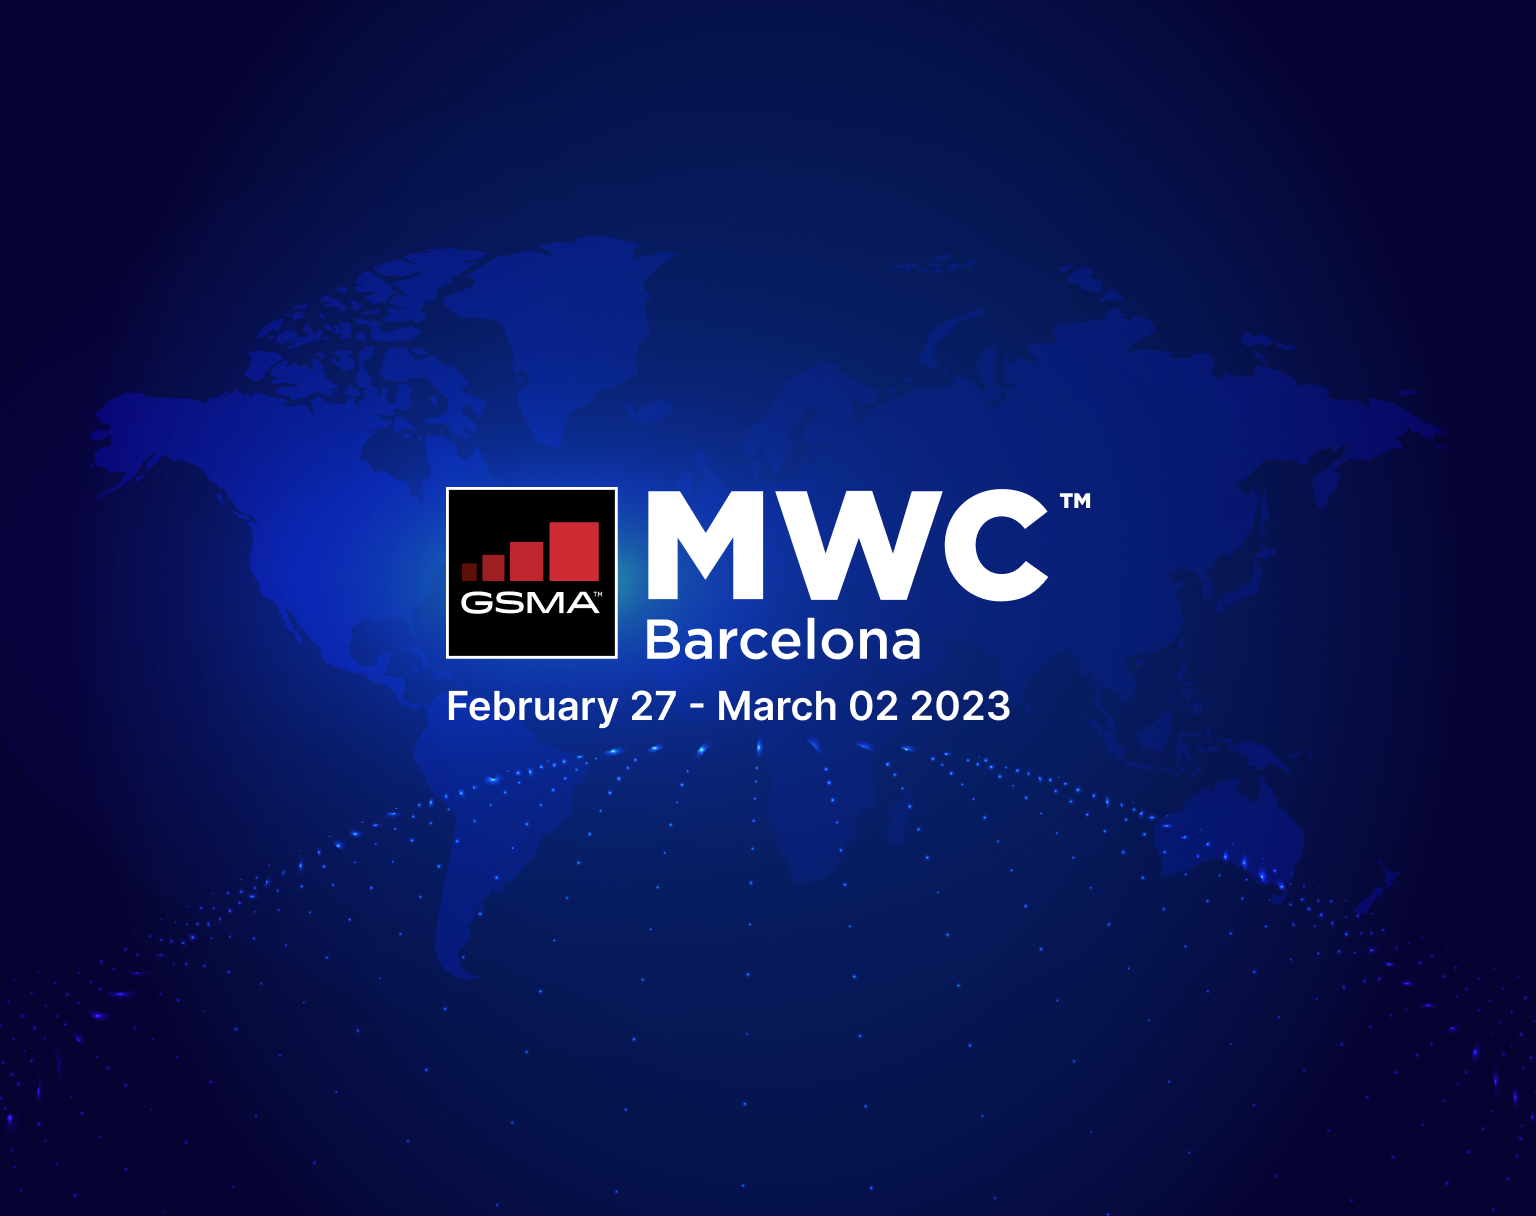 mobile-world-congress-mwc-2023-barcelona